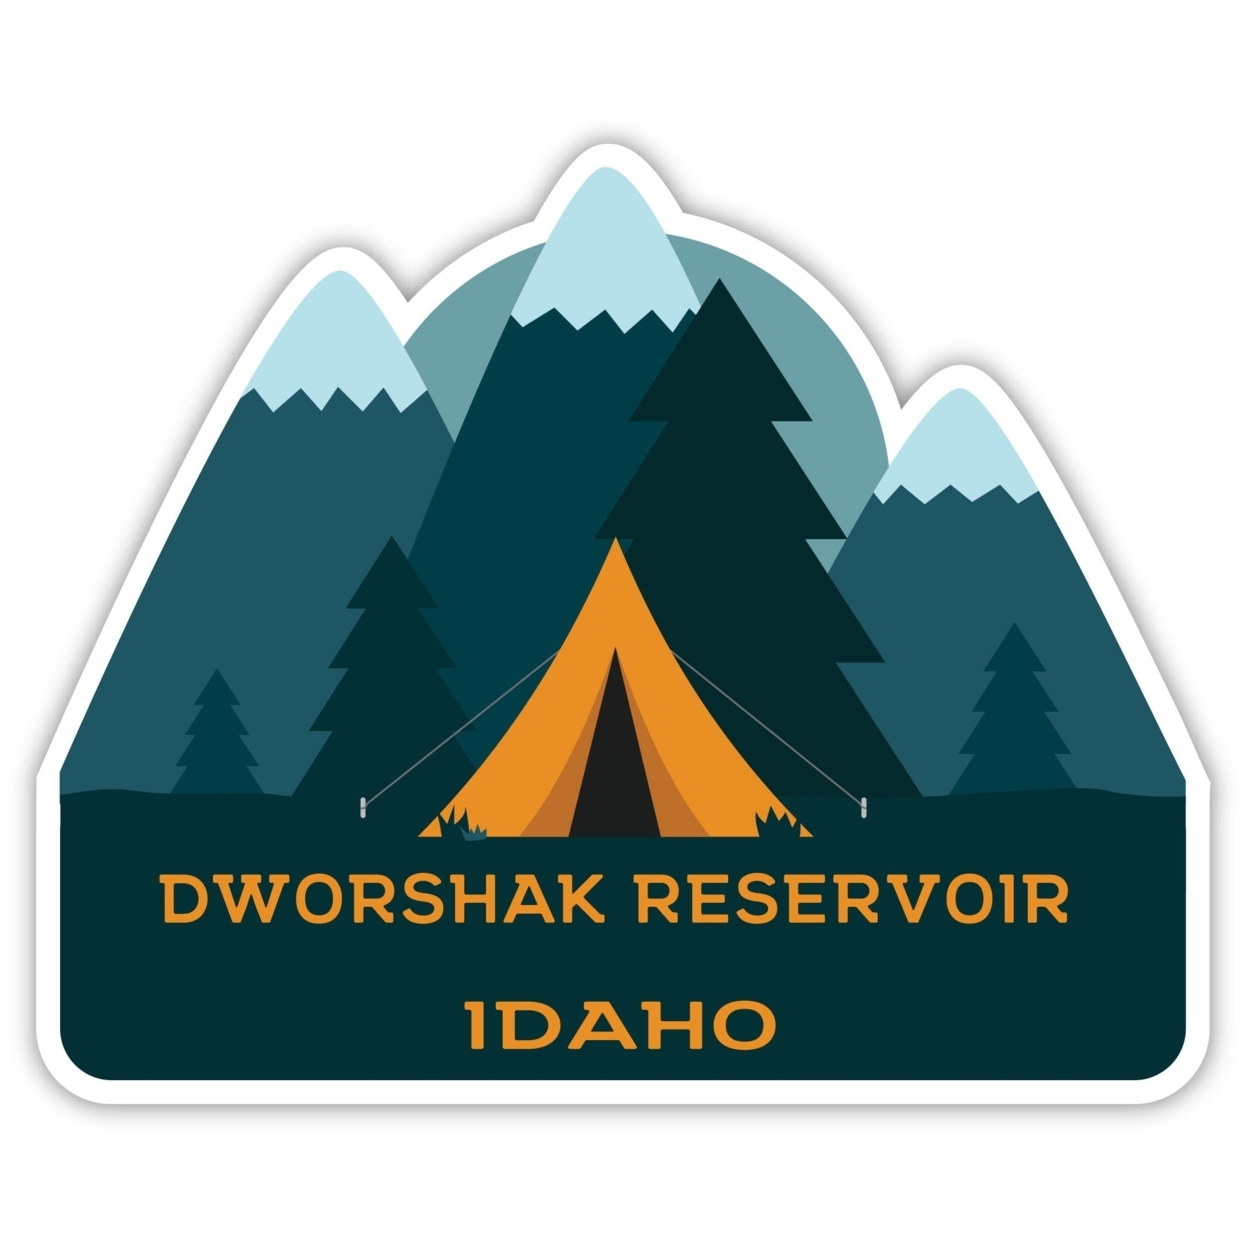 Dworshak Reservoir Idaho Souvenir Decorative Stickers (Choose Theme And Size) - 4-Pack, 2-Inch, Tent